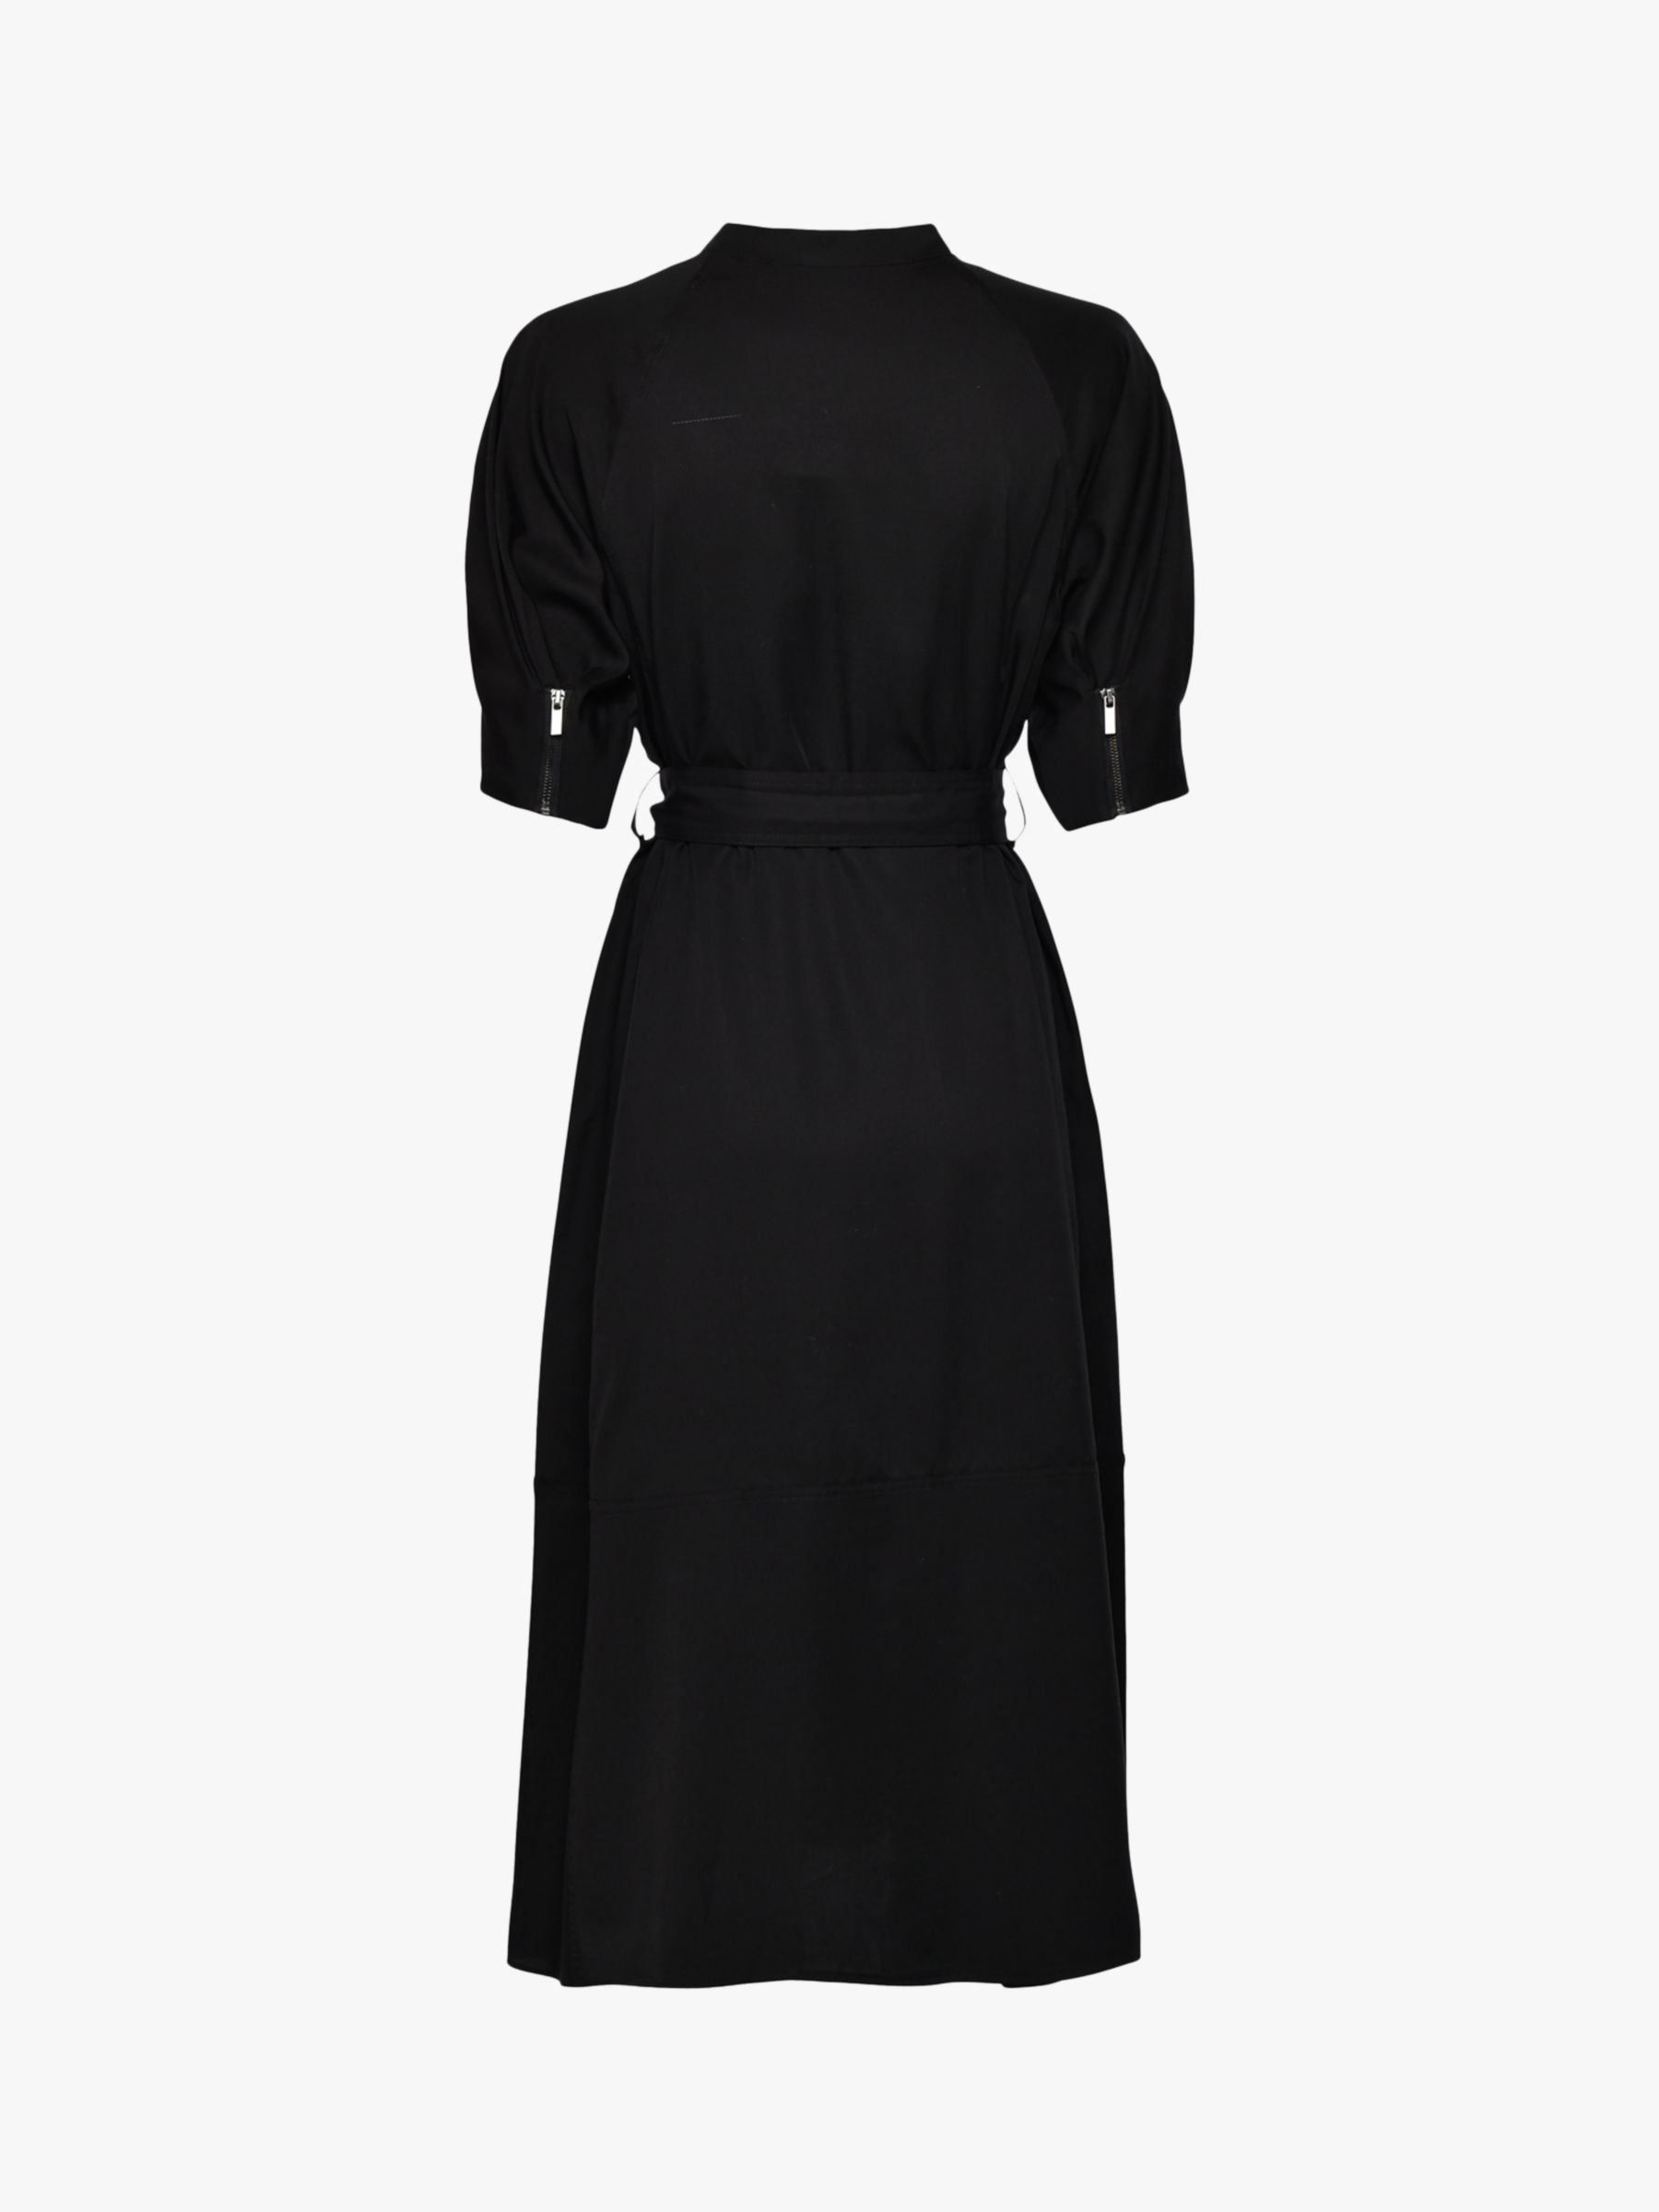 French Connection Clarita Shirt Dress, Black at John Lewis & Partners